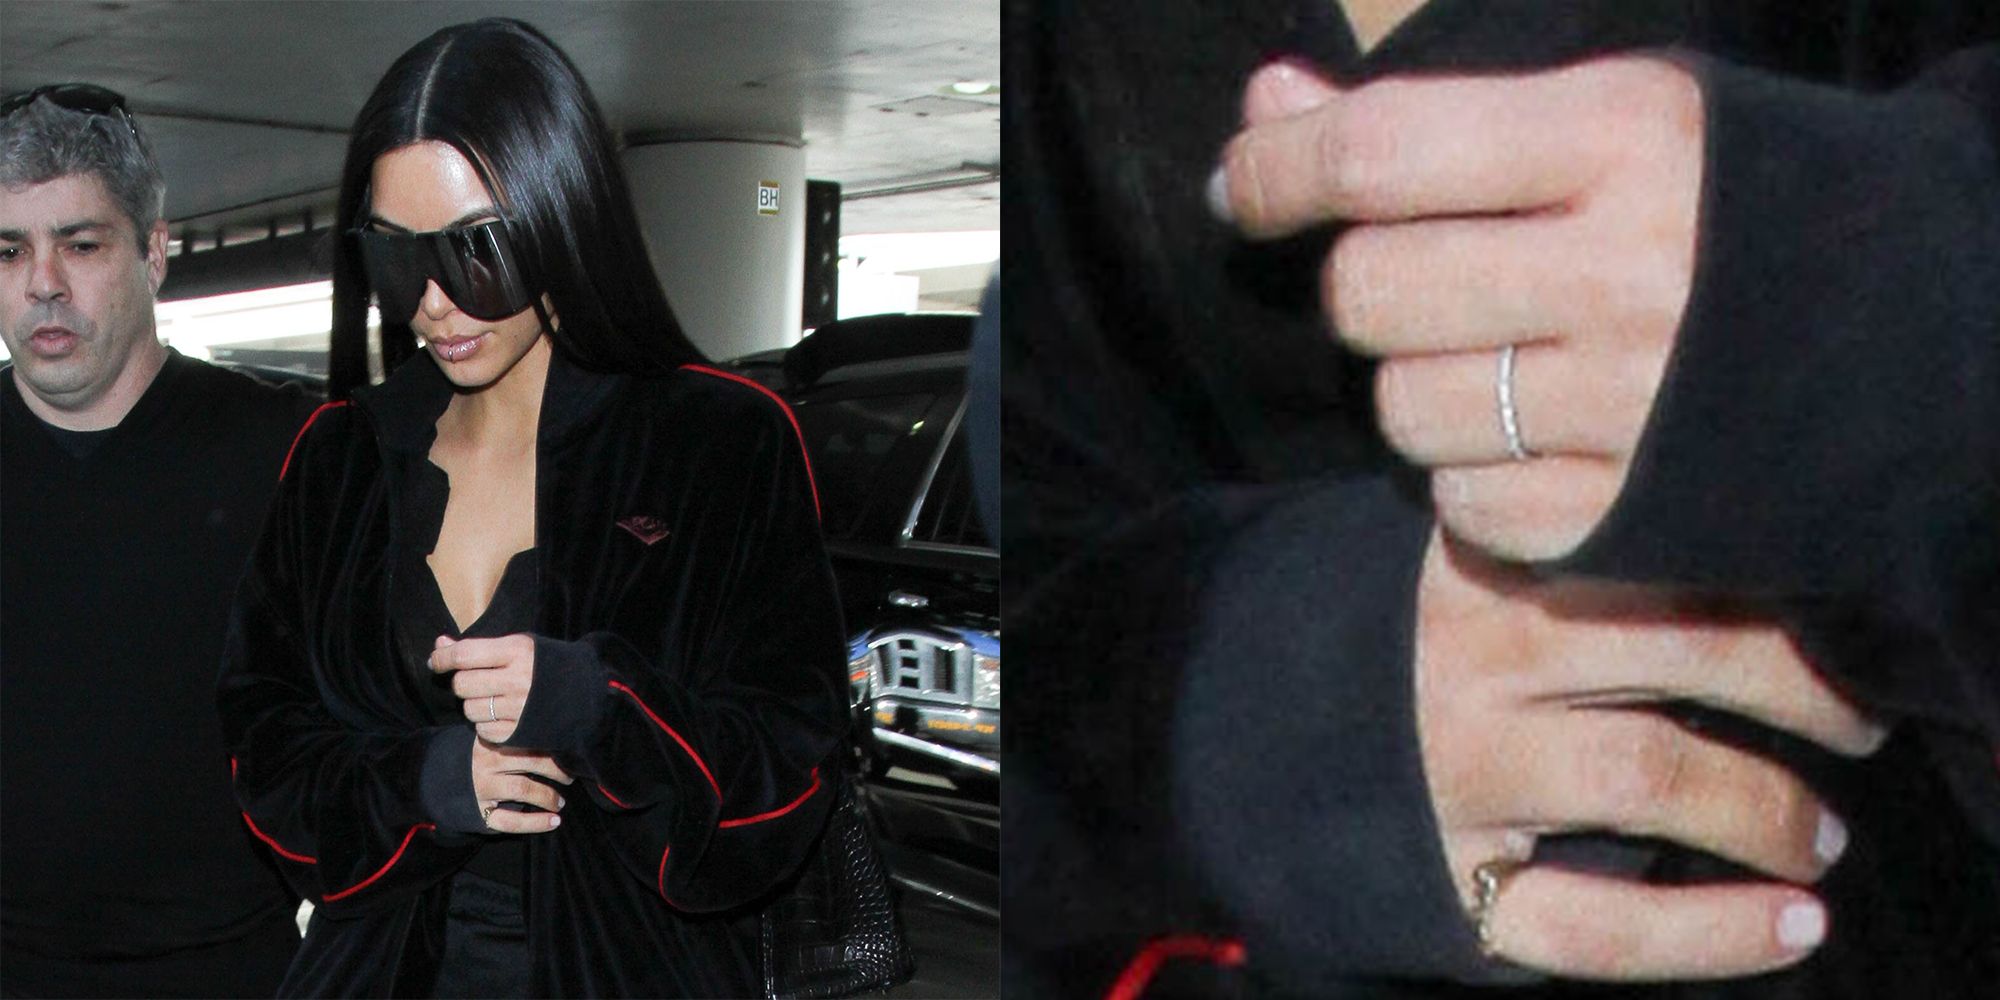 Kim Kardashian Wears Her New Super Minimal Wedding Ring